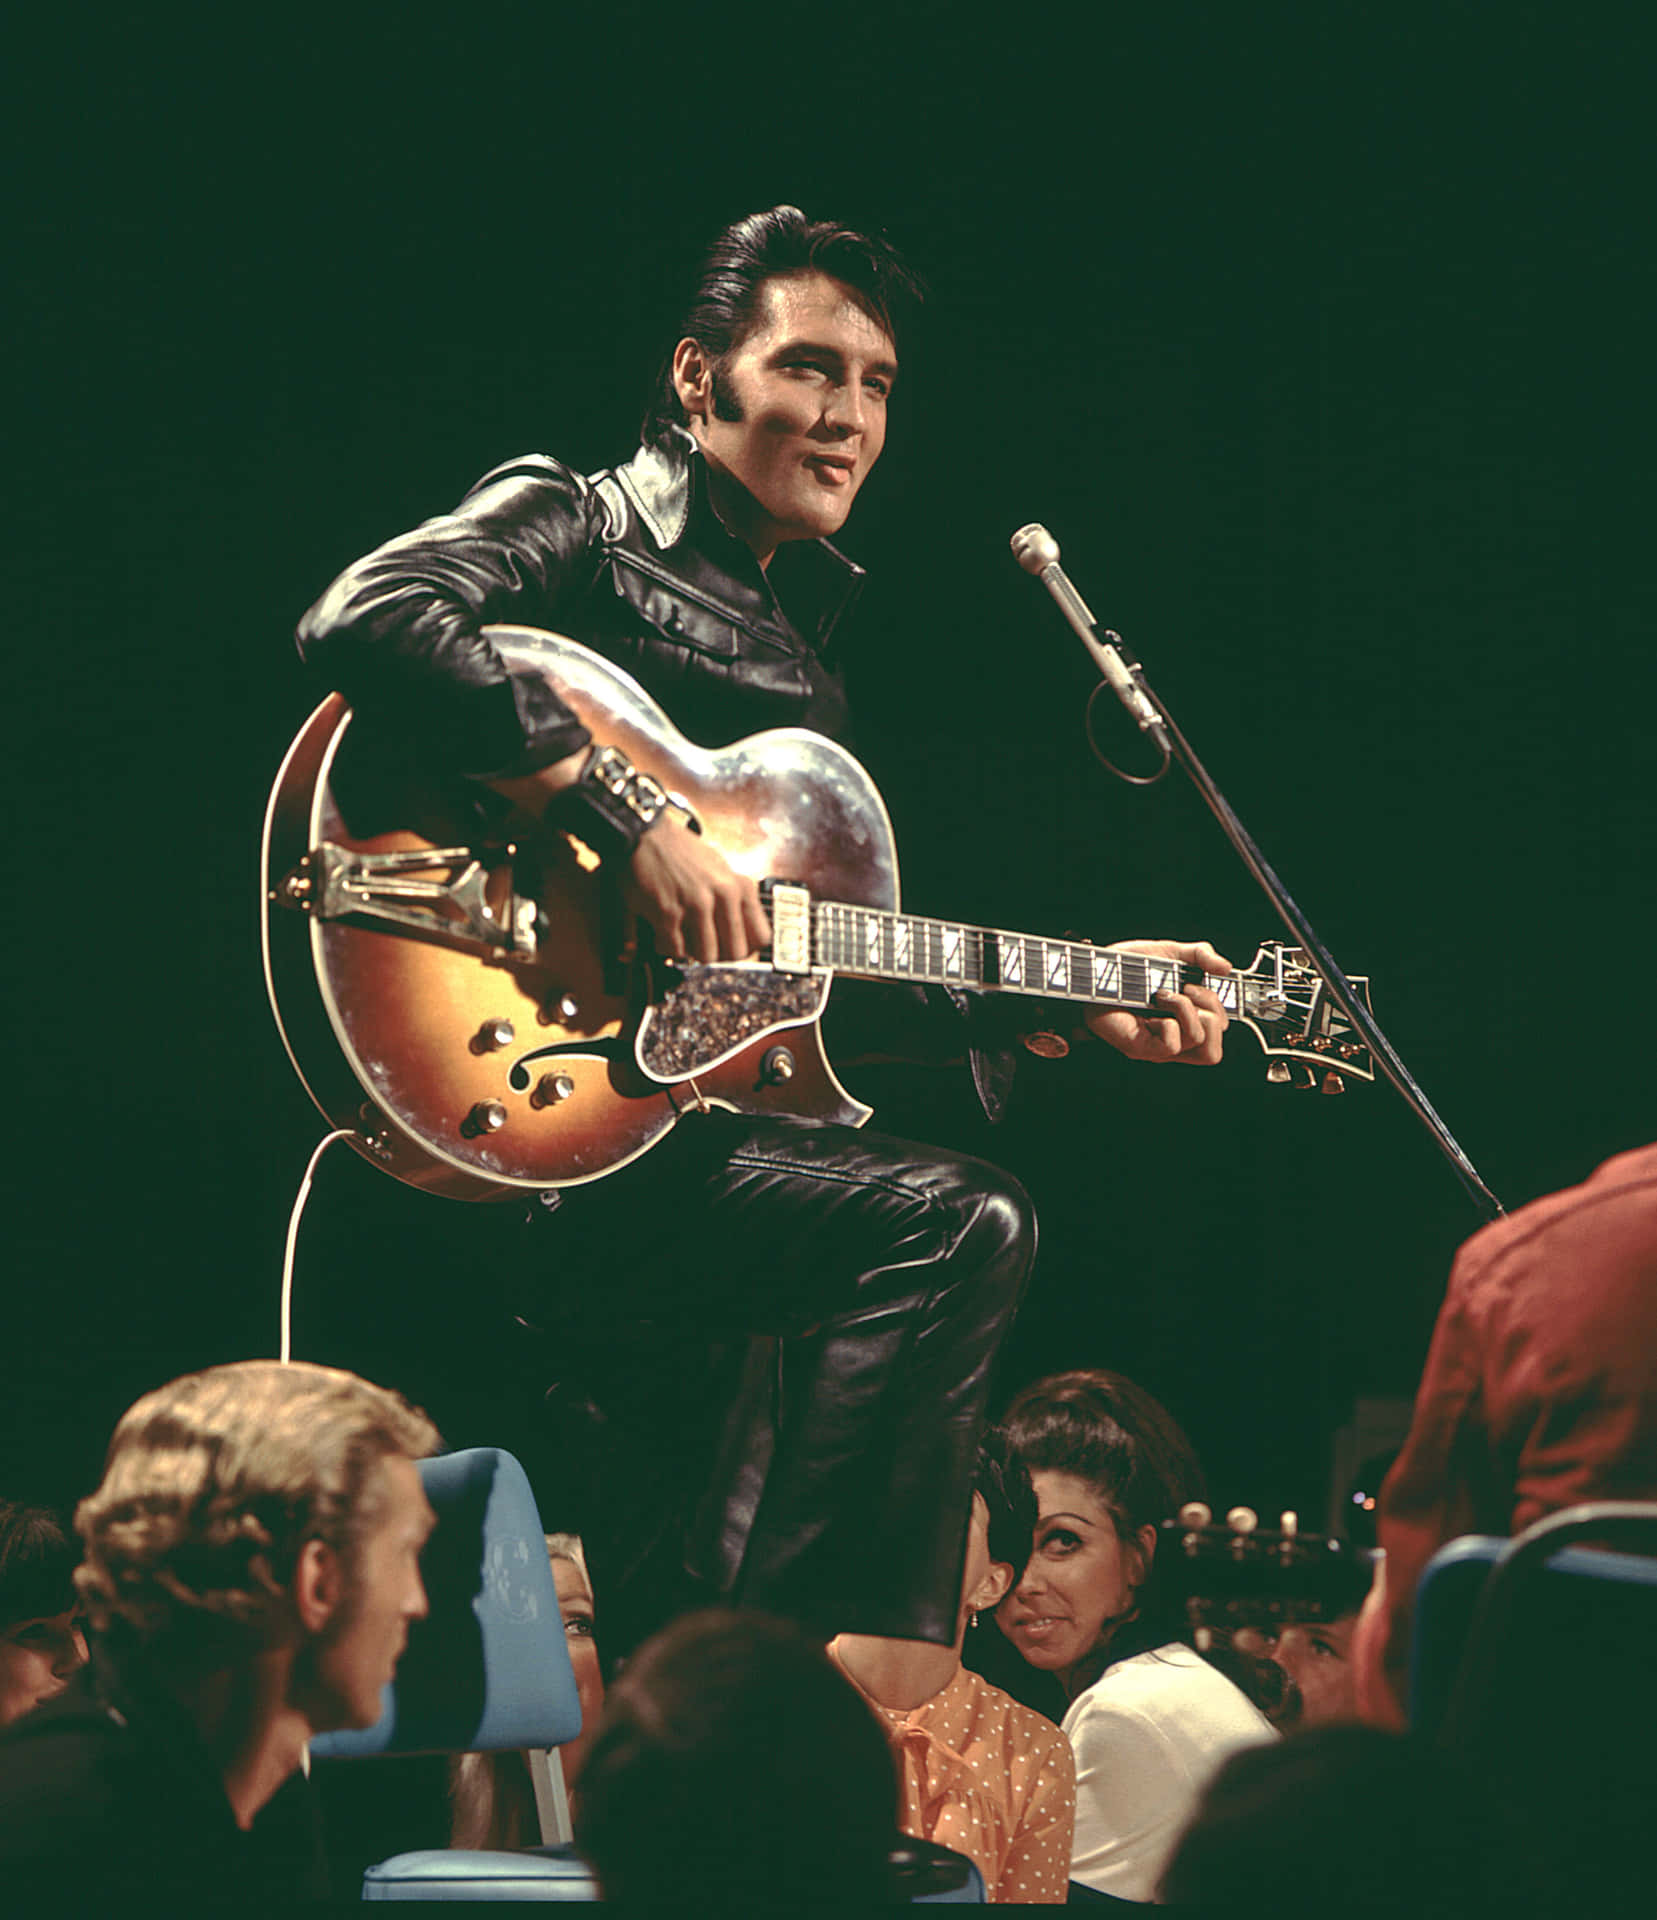 Elvis Presley Impersonator